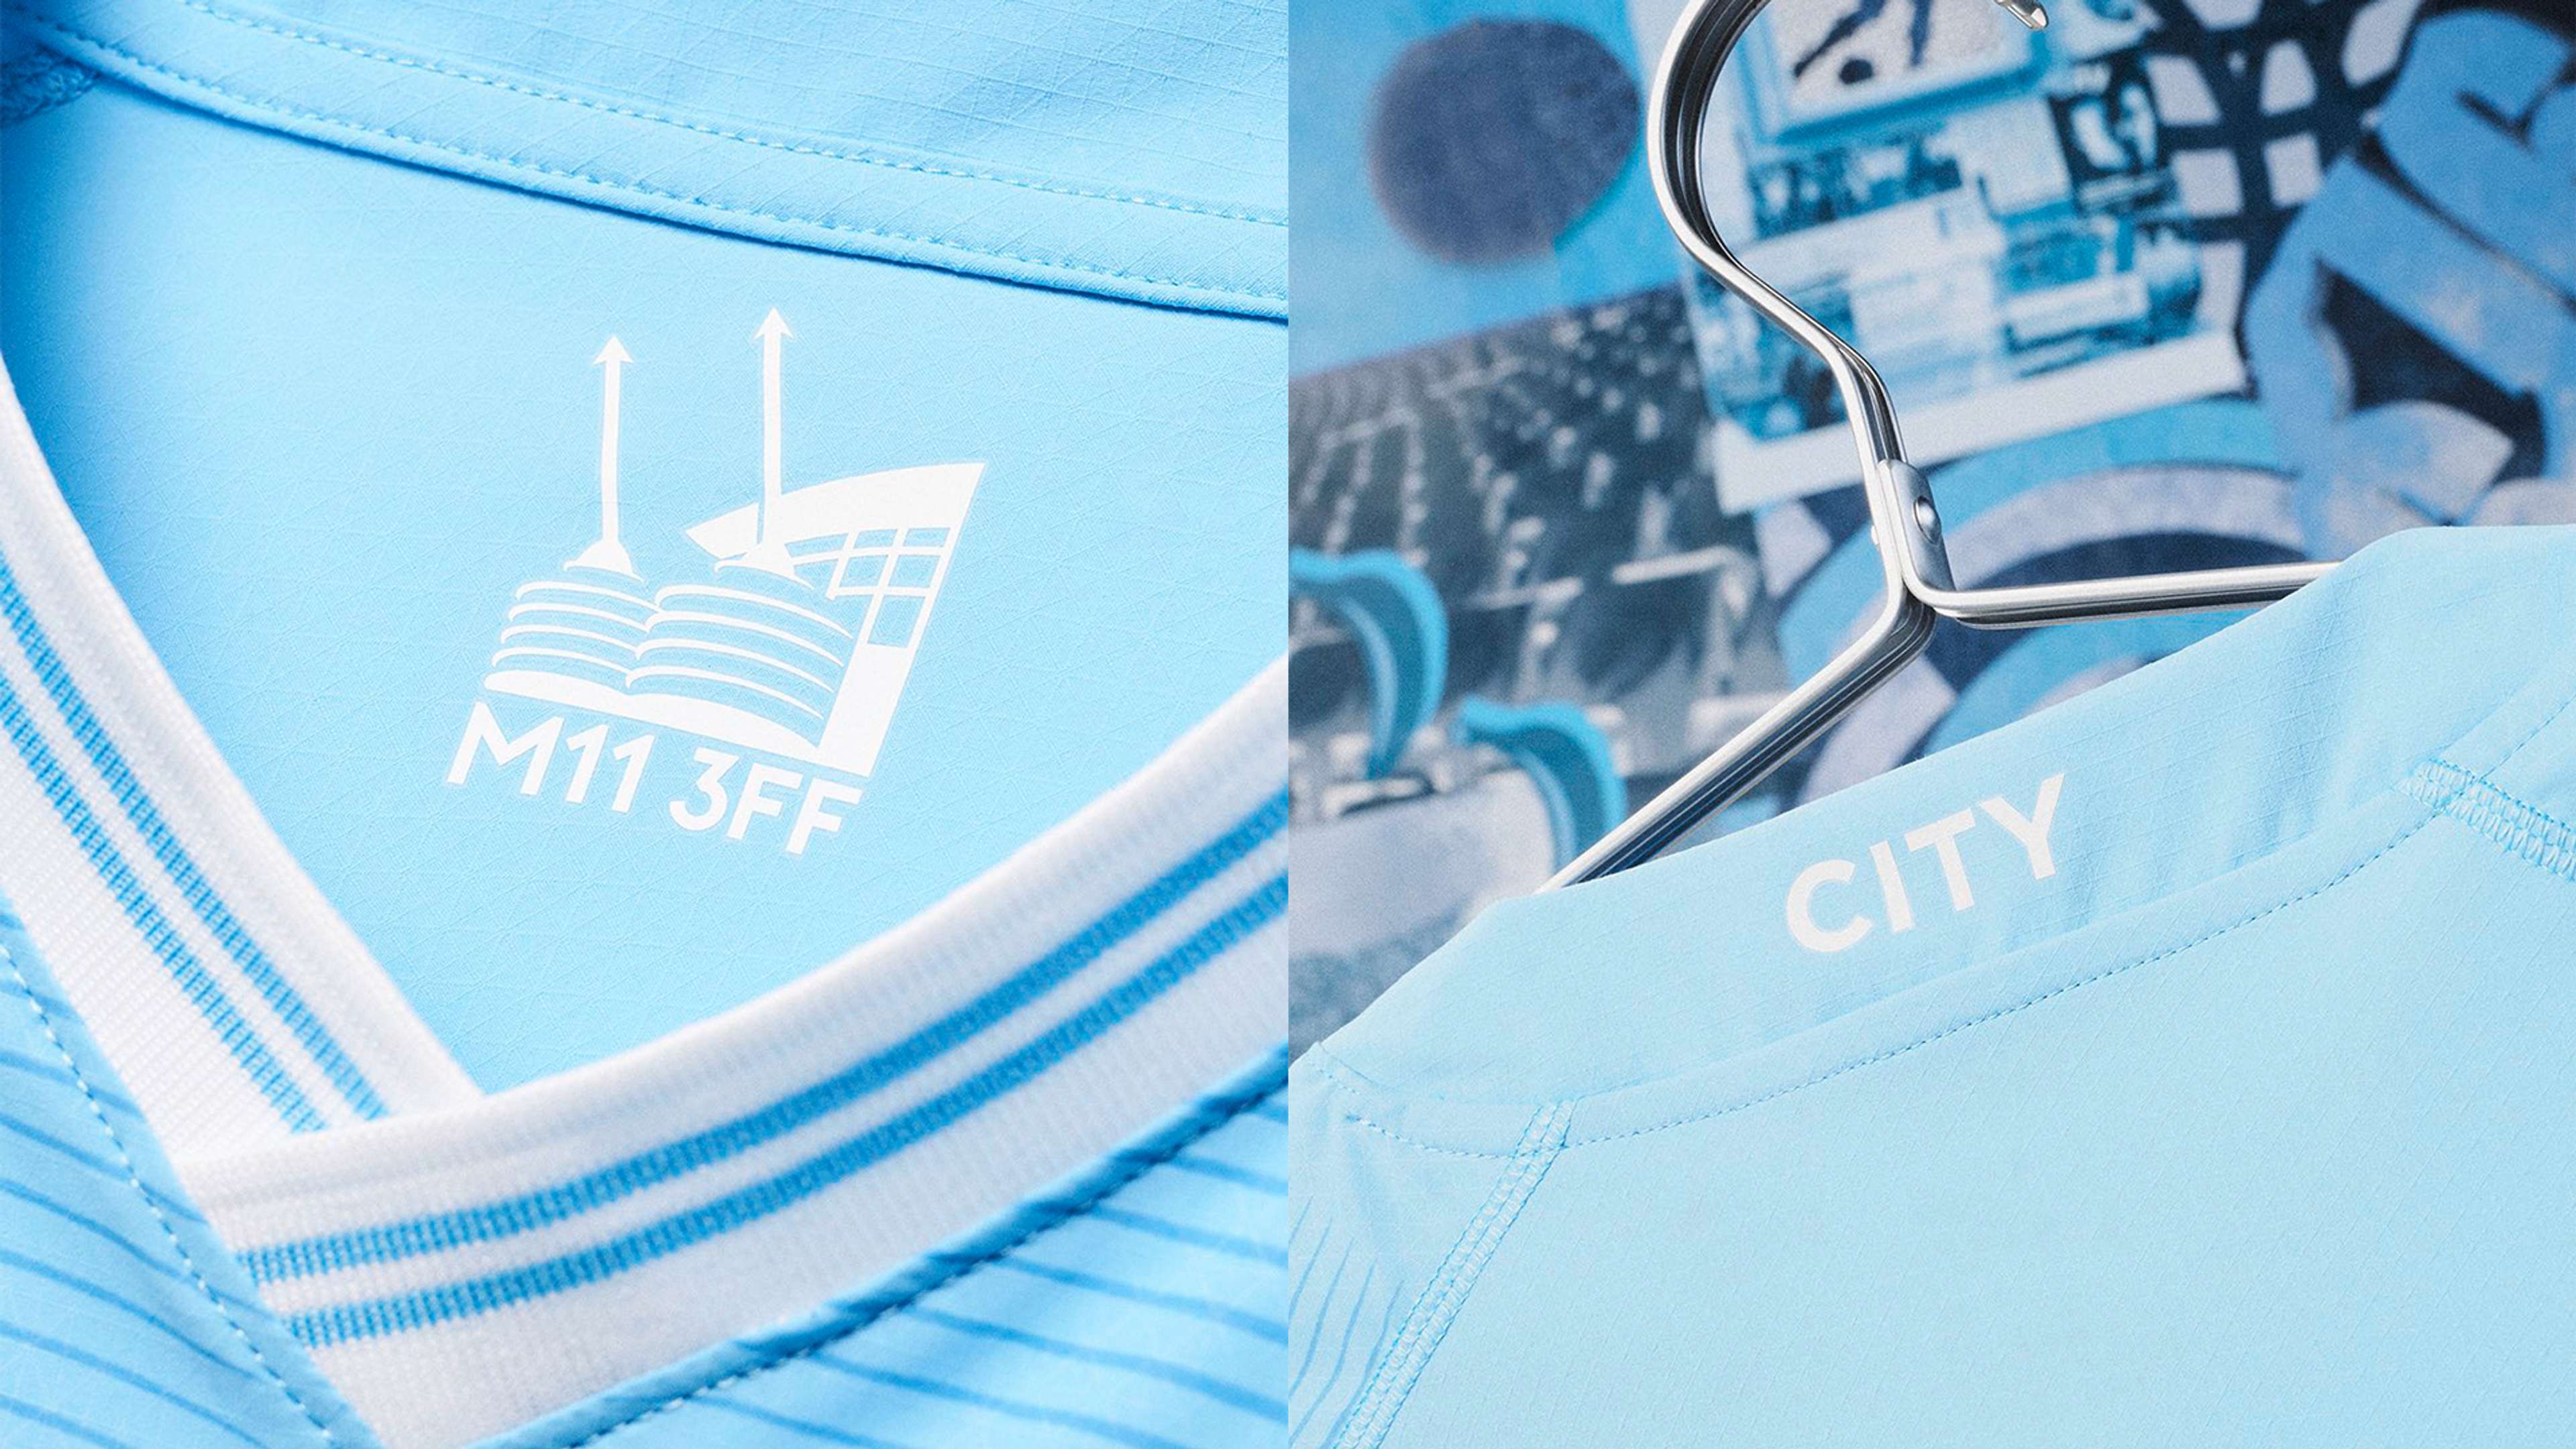 Man City 2023-24 Home kit - closer look